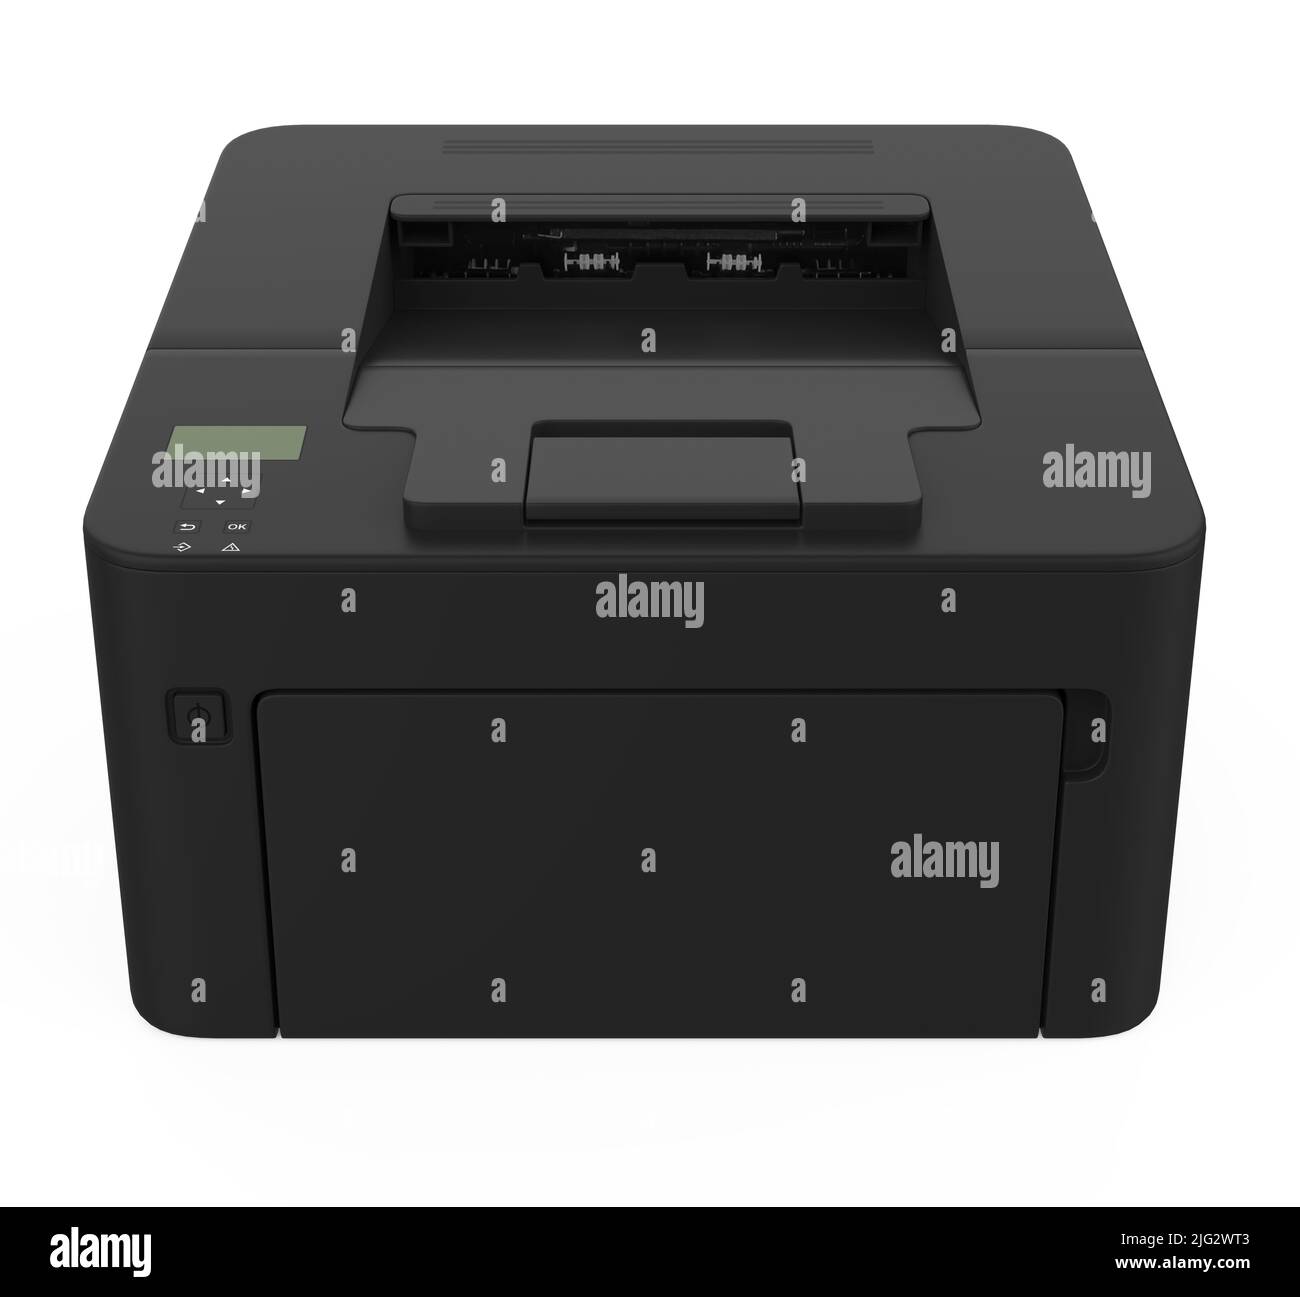 Impresora escaner fotografías e imágenes de alta resolución - Alamy